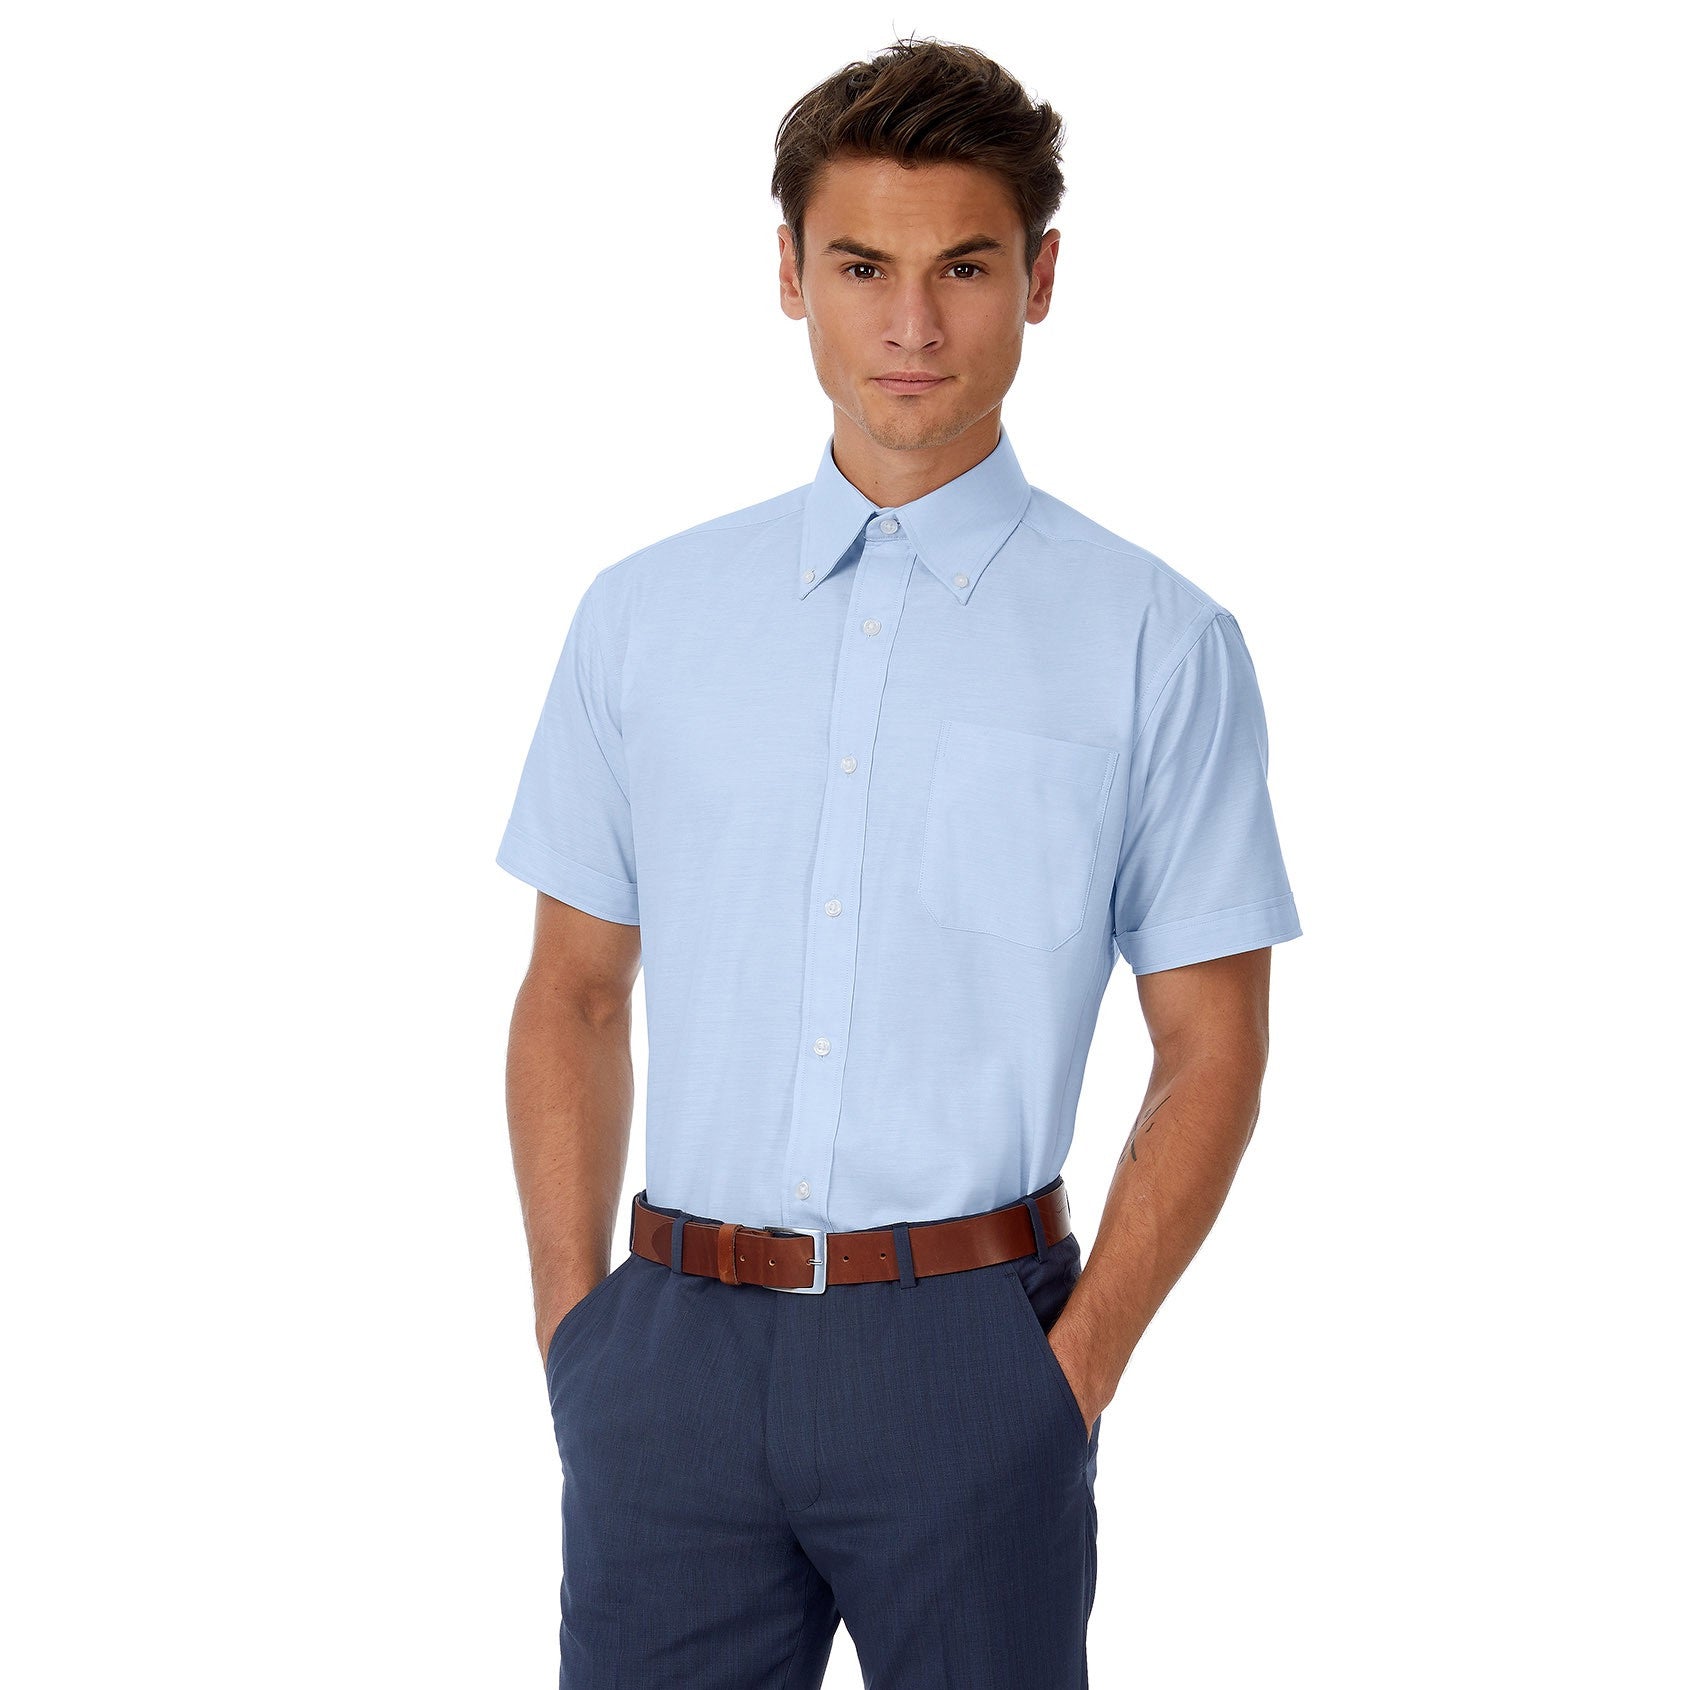 B&C Men's Oxford Short Sleeve Shirt